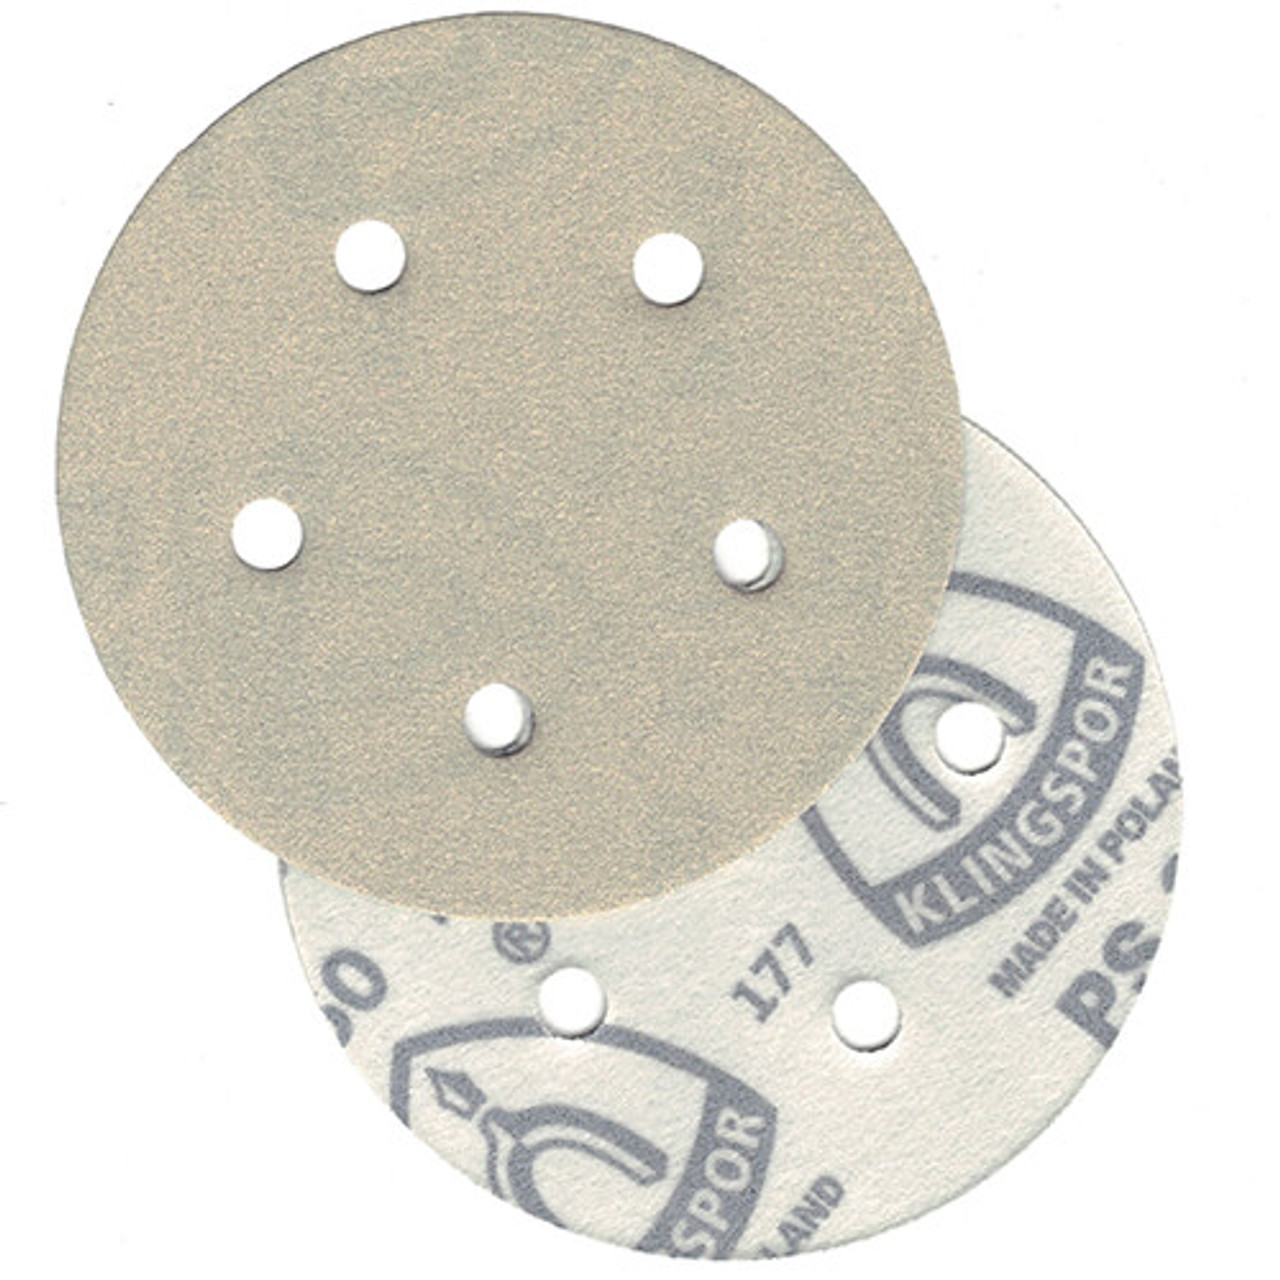 Klingspor Abrasives Stearated Aluminum Oxide, 5"x 5 Hole Hook & Loop Discs, 120 Grit, 50pk